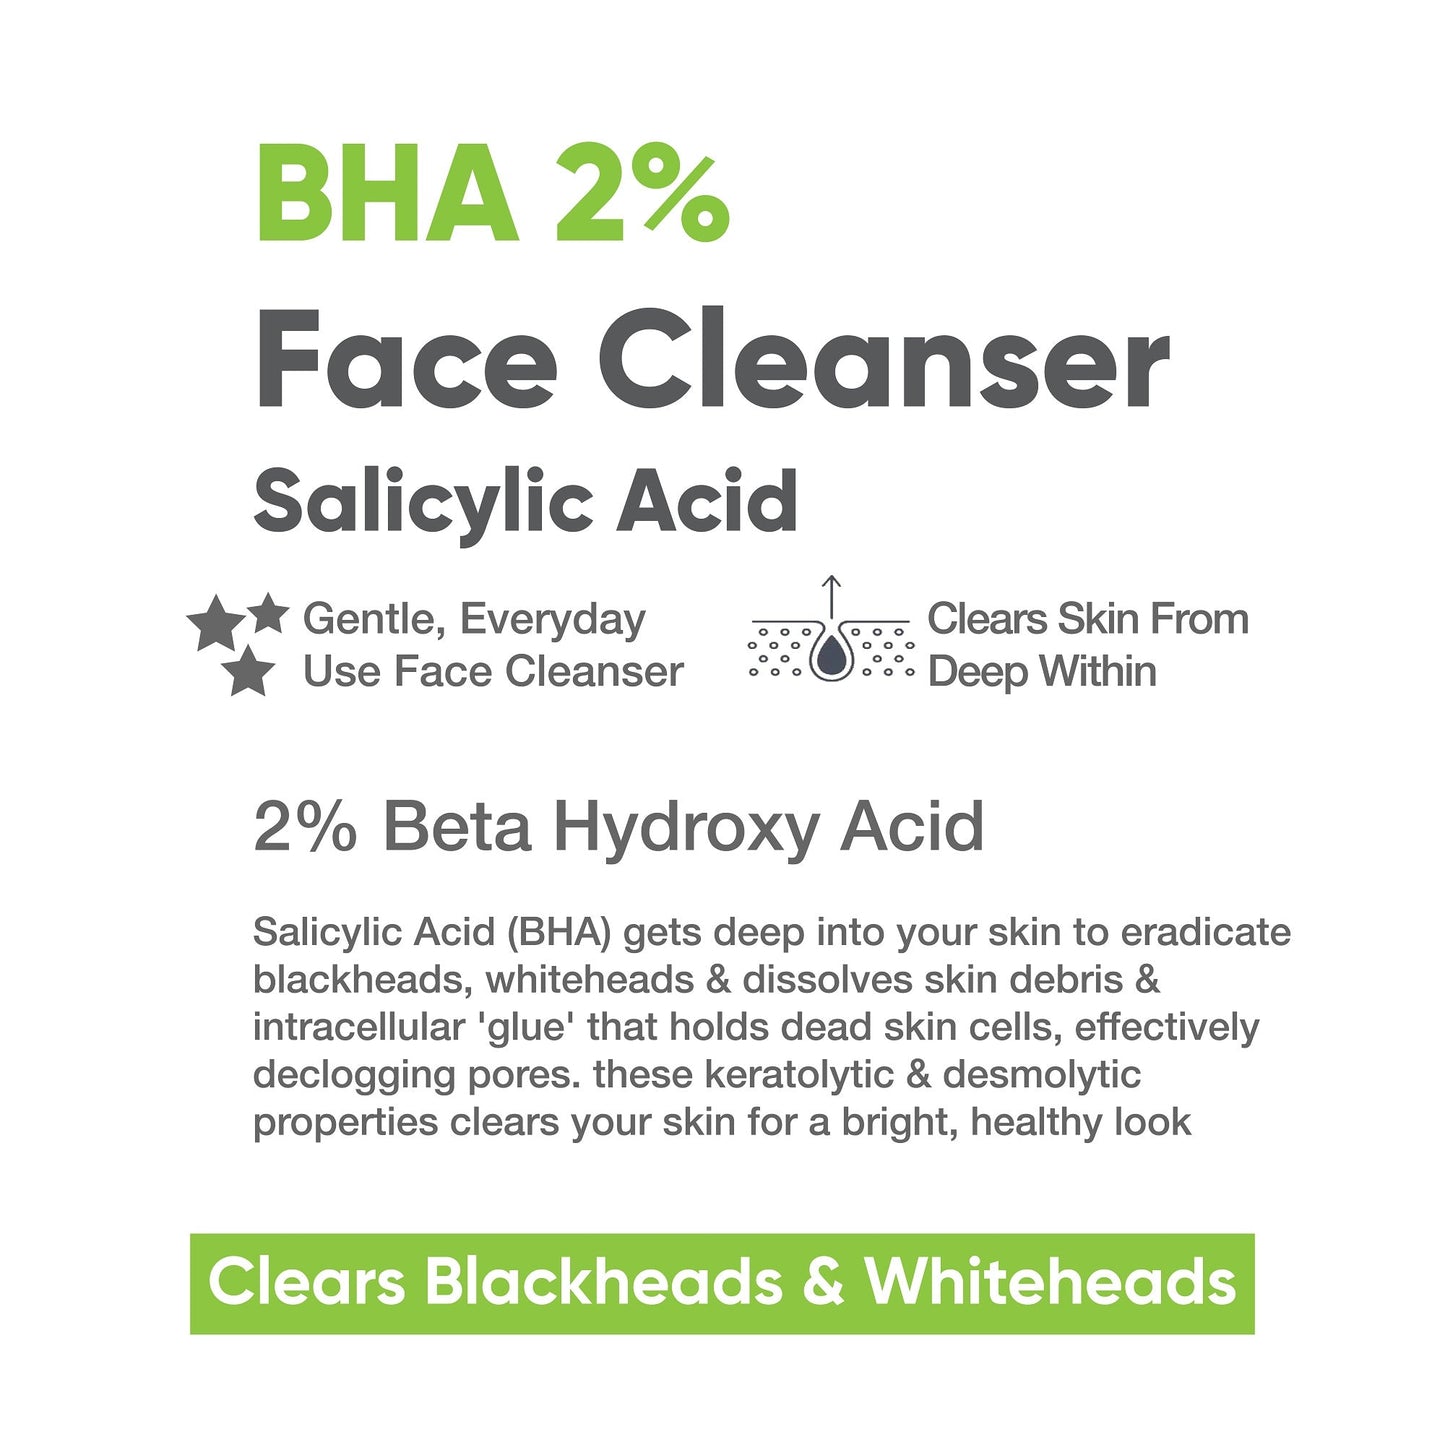 BHA - 2% Salicylic Acid Face Cleanser, 100ml - CosIQ